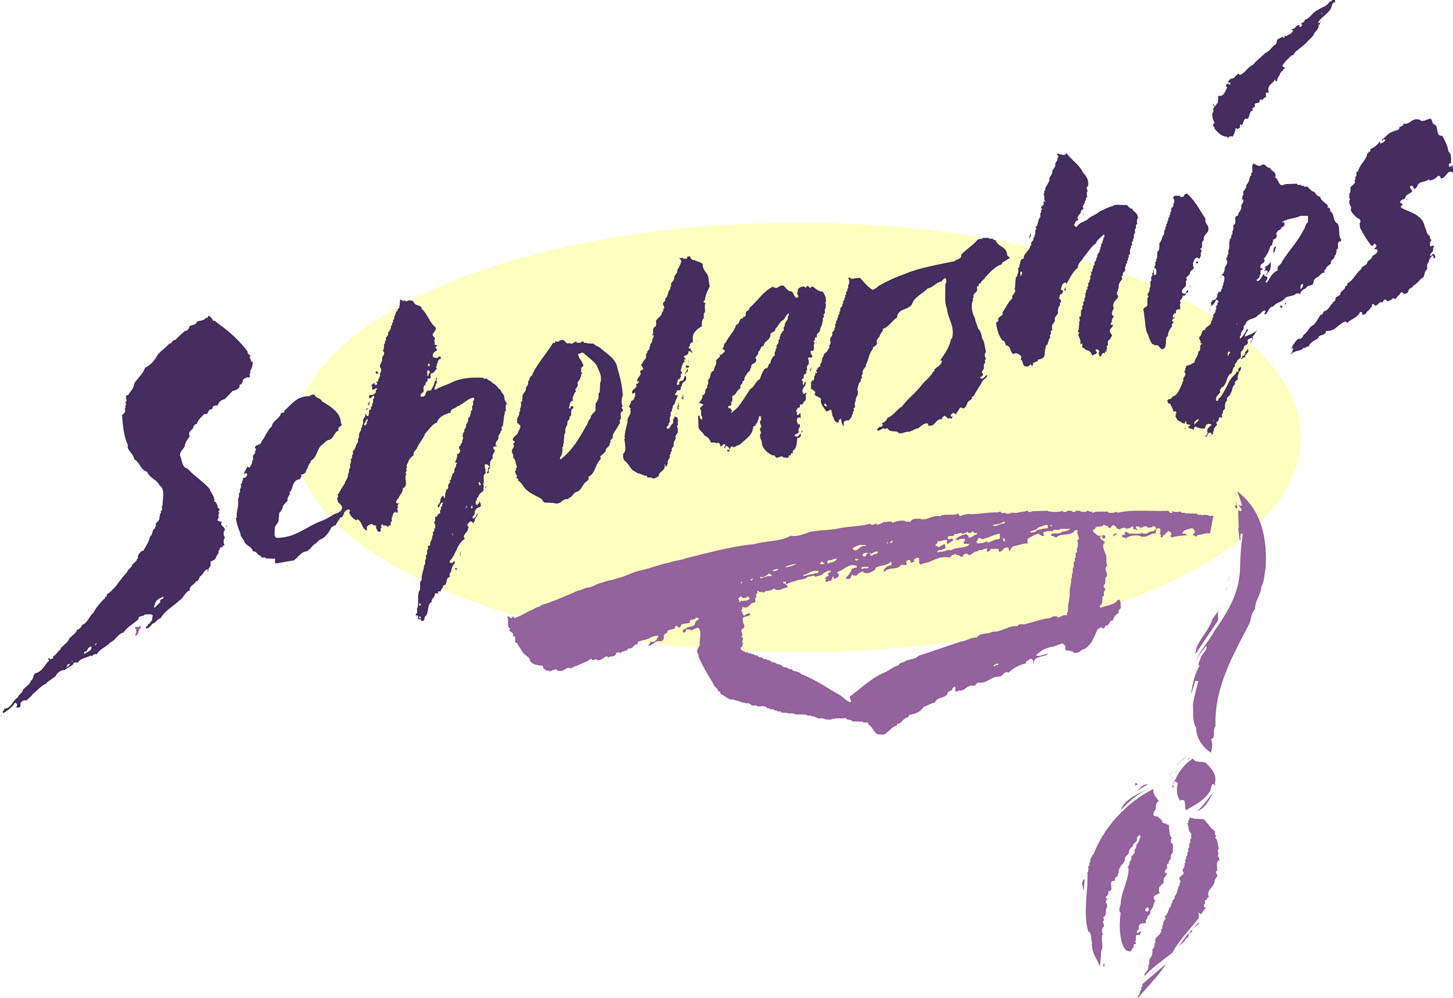 KSU Merit-Based Scholarship Program – USA, 2017